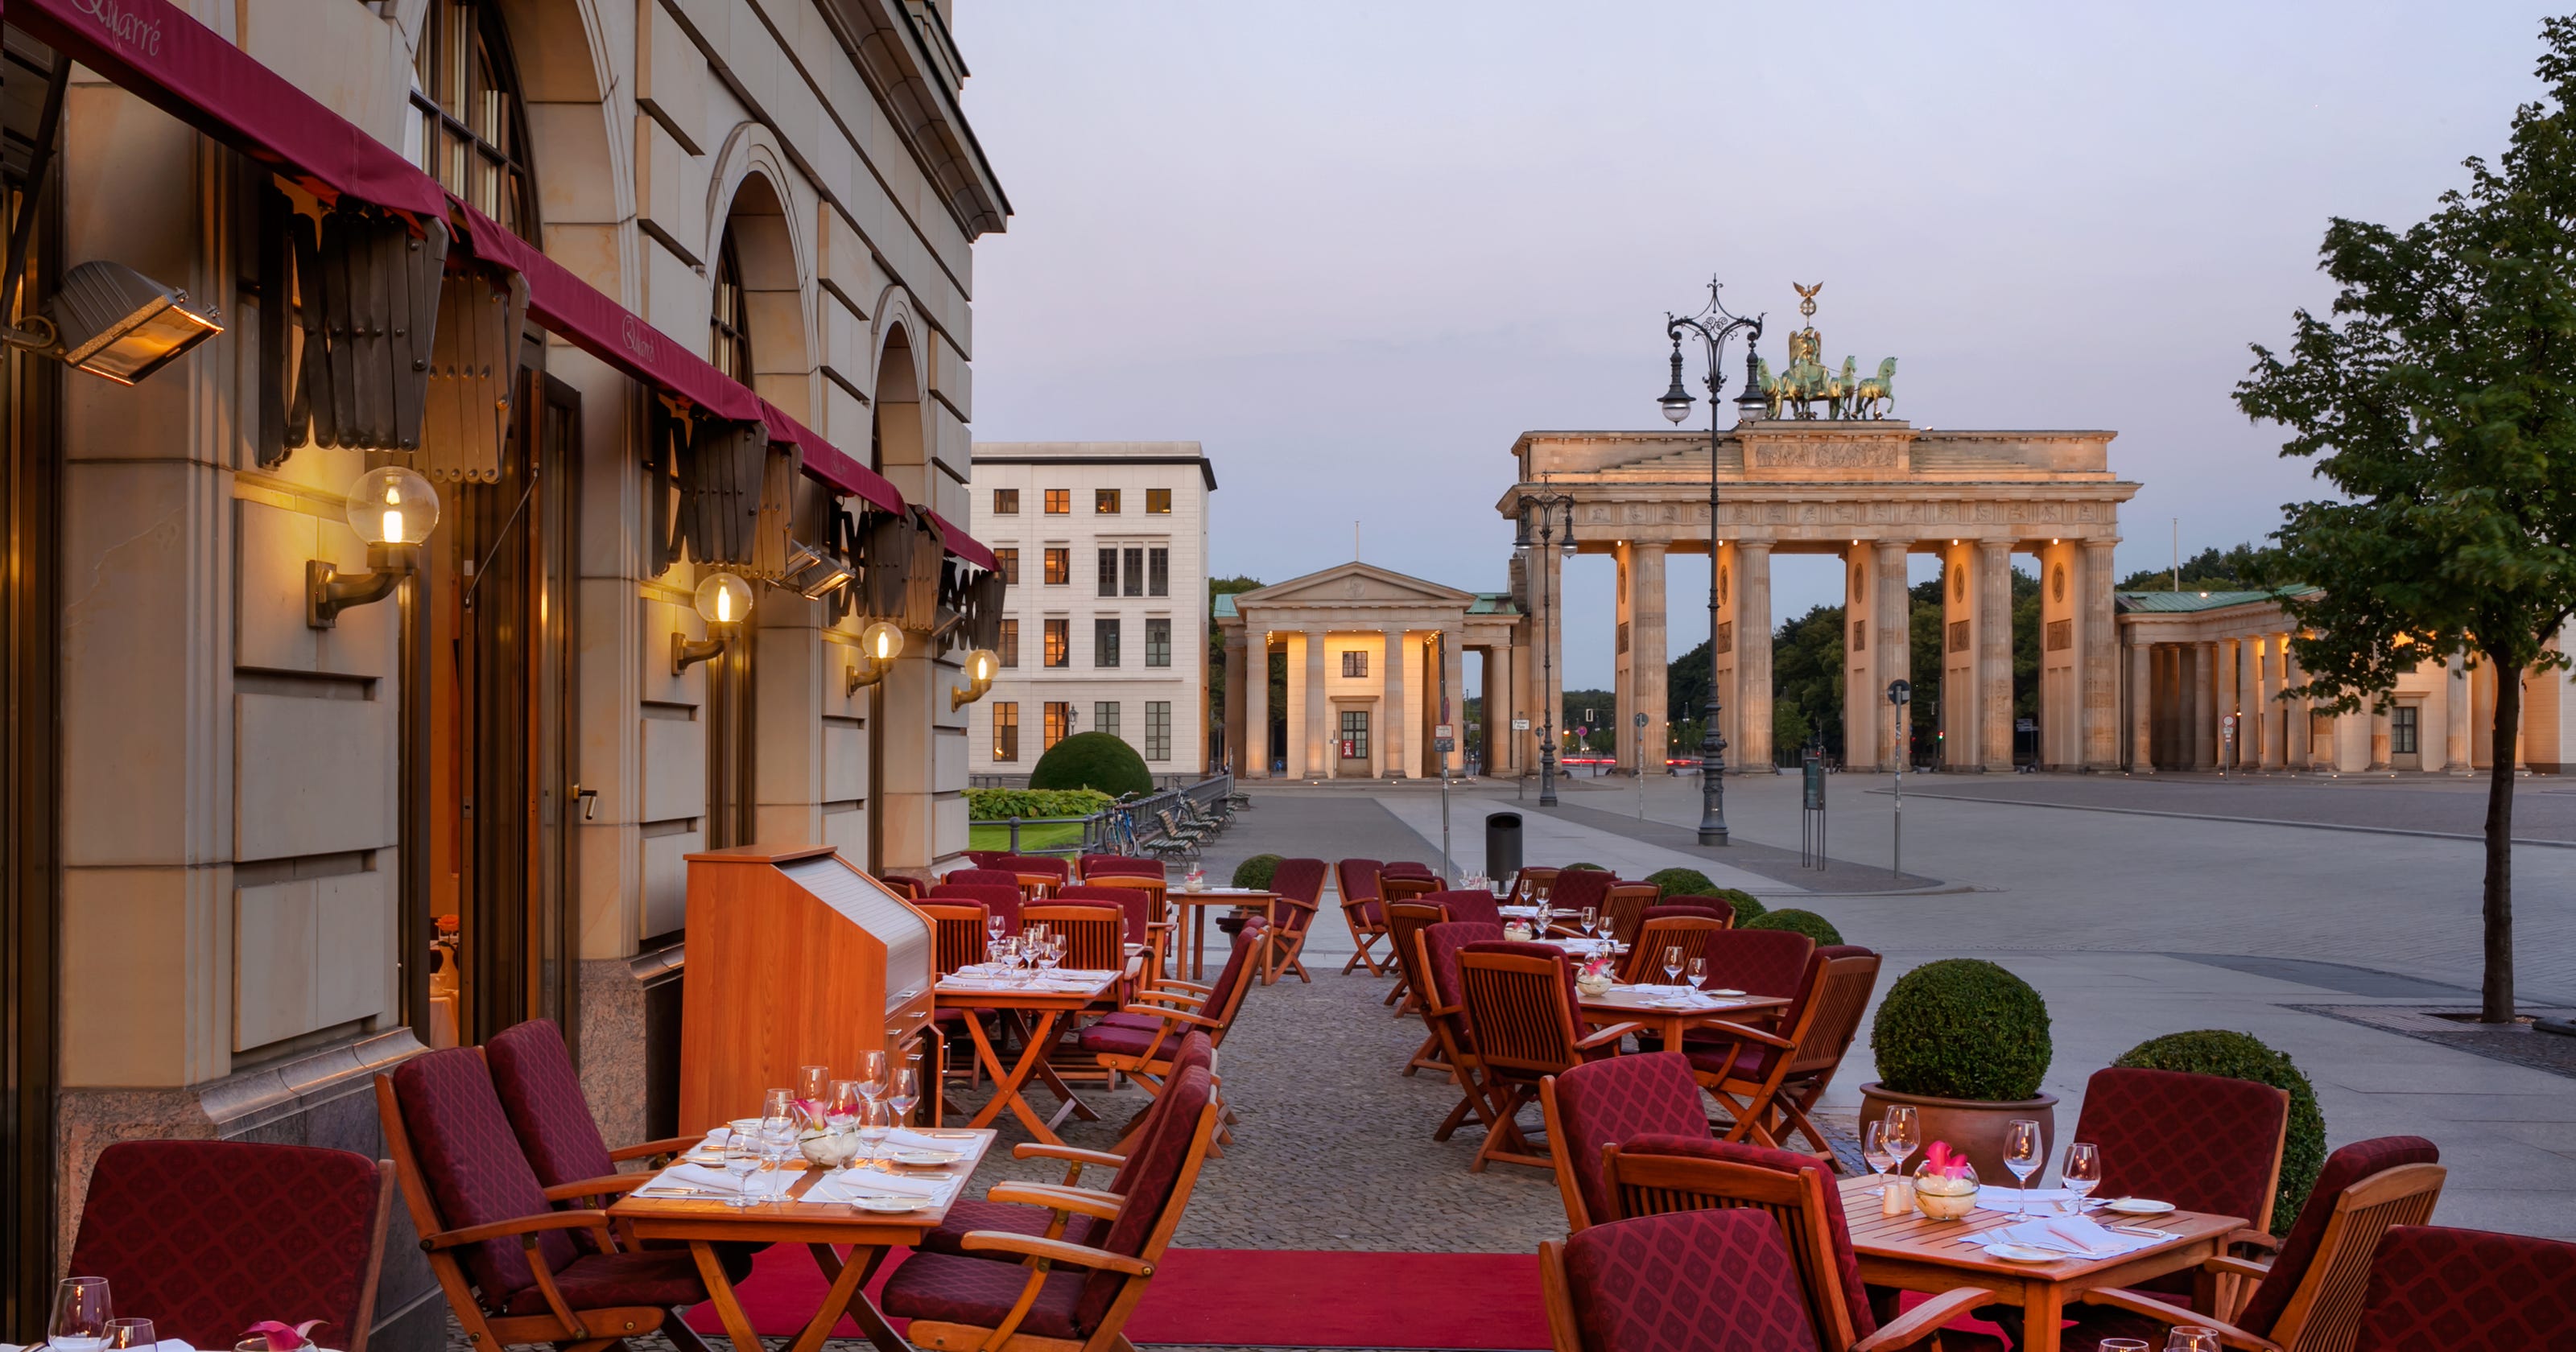 Best Berlin hotels: Top rated properties on booking.com